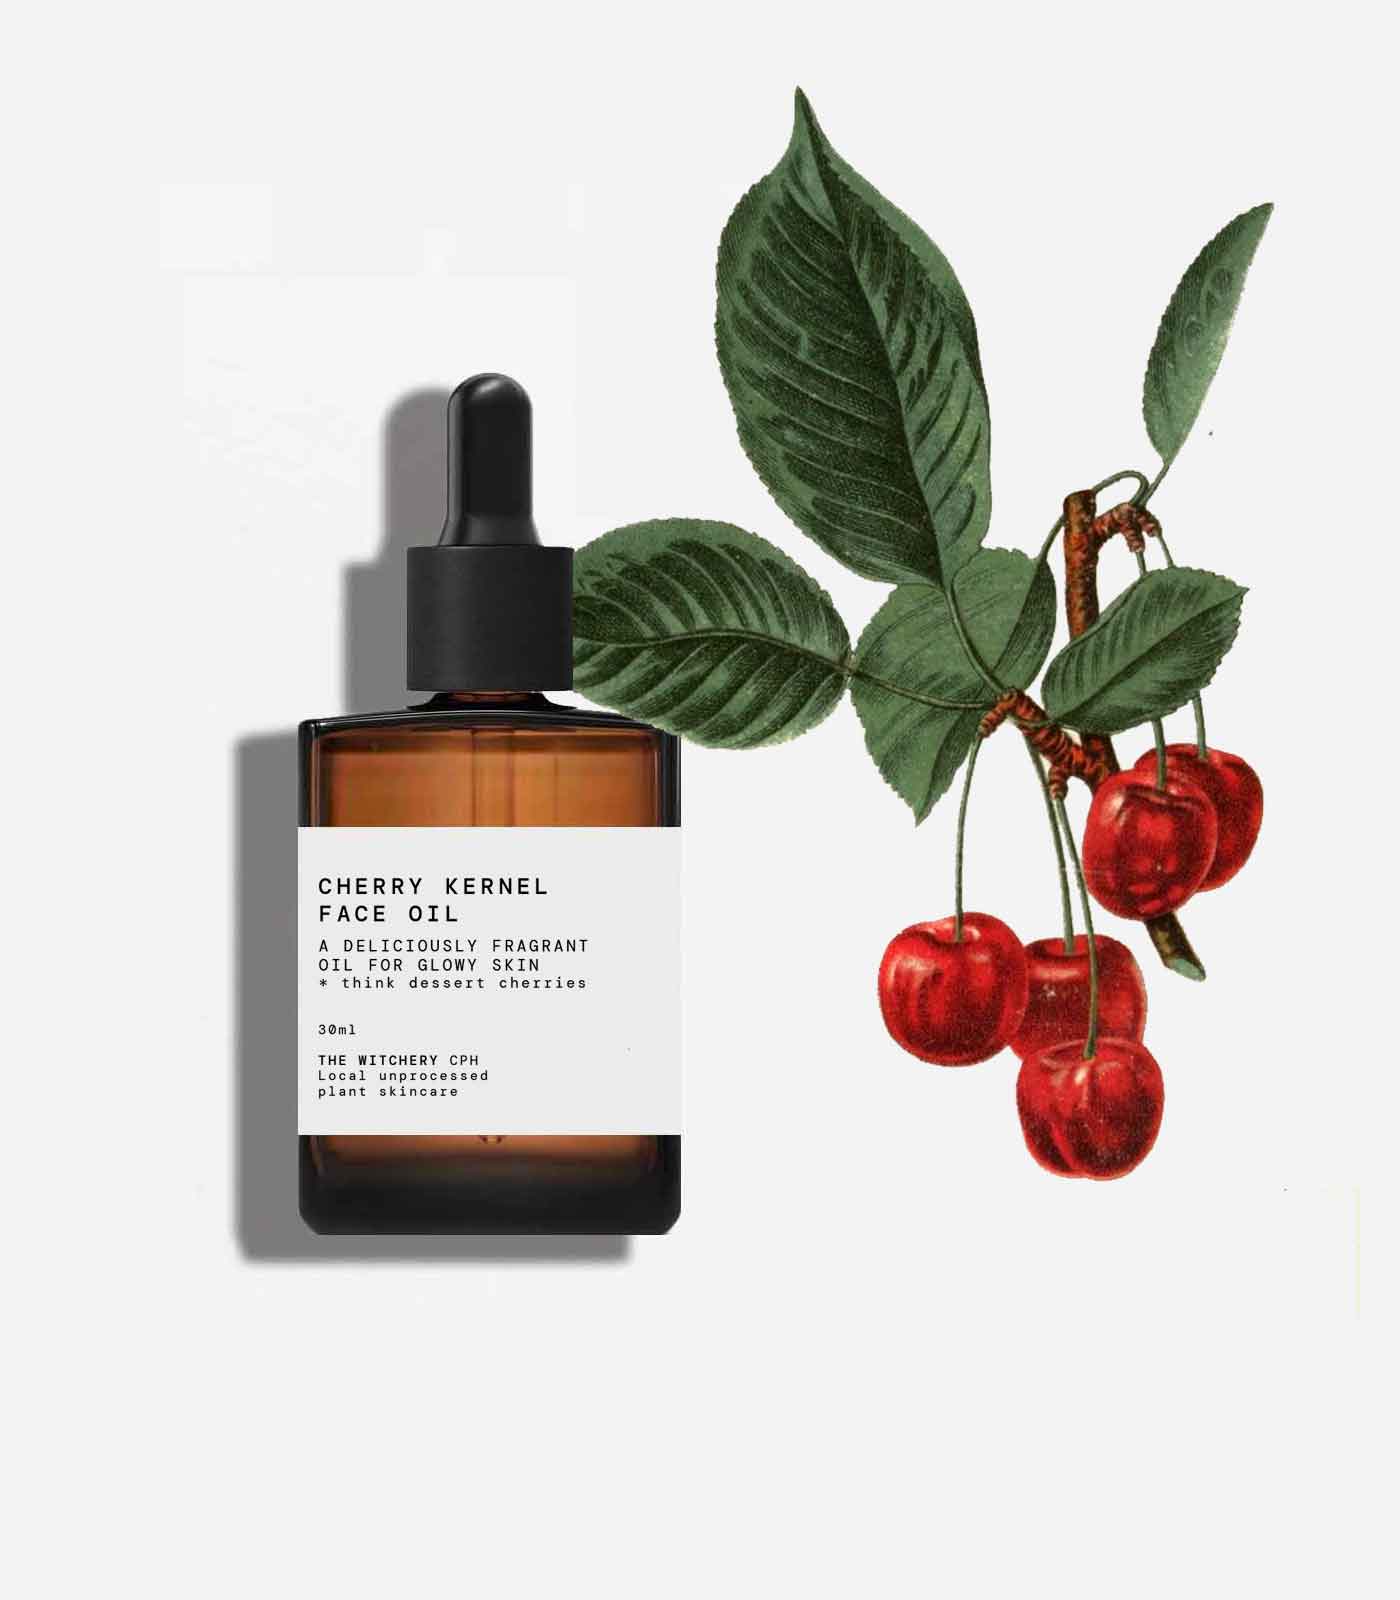 Cherry Essential Oil Set Organic Plant Natural 100% Pure